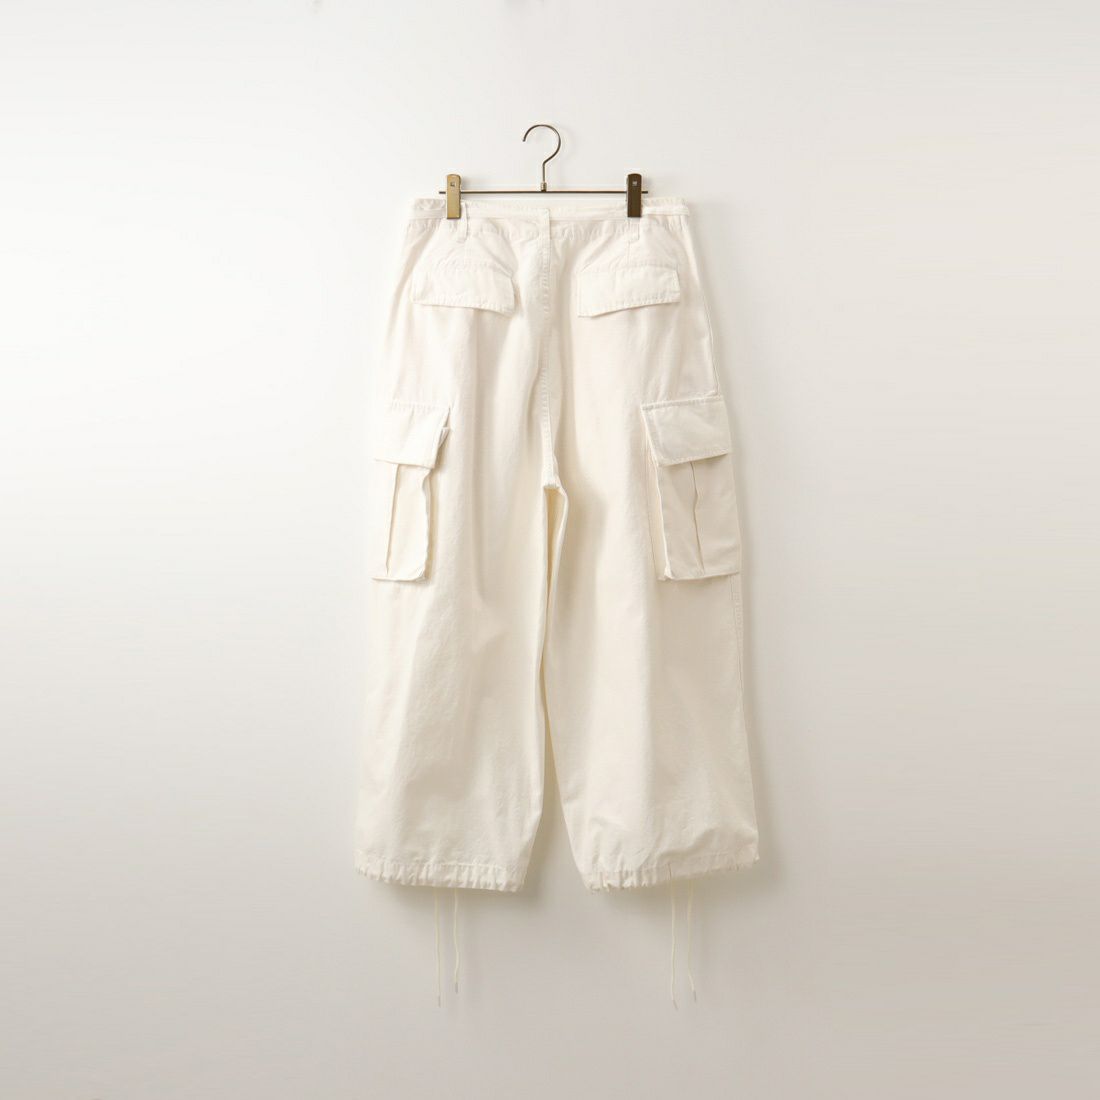 Jeans Factory Clothes [ジーンズファクトリークローズ] ワイドBDUパンツ [JFC-231-037] WHITE